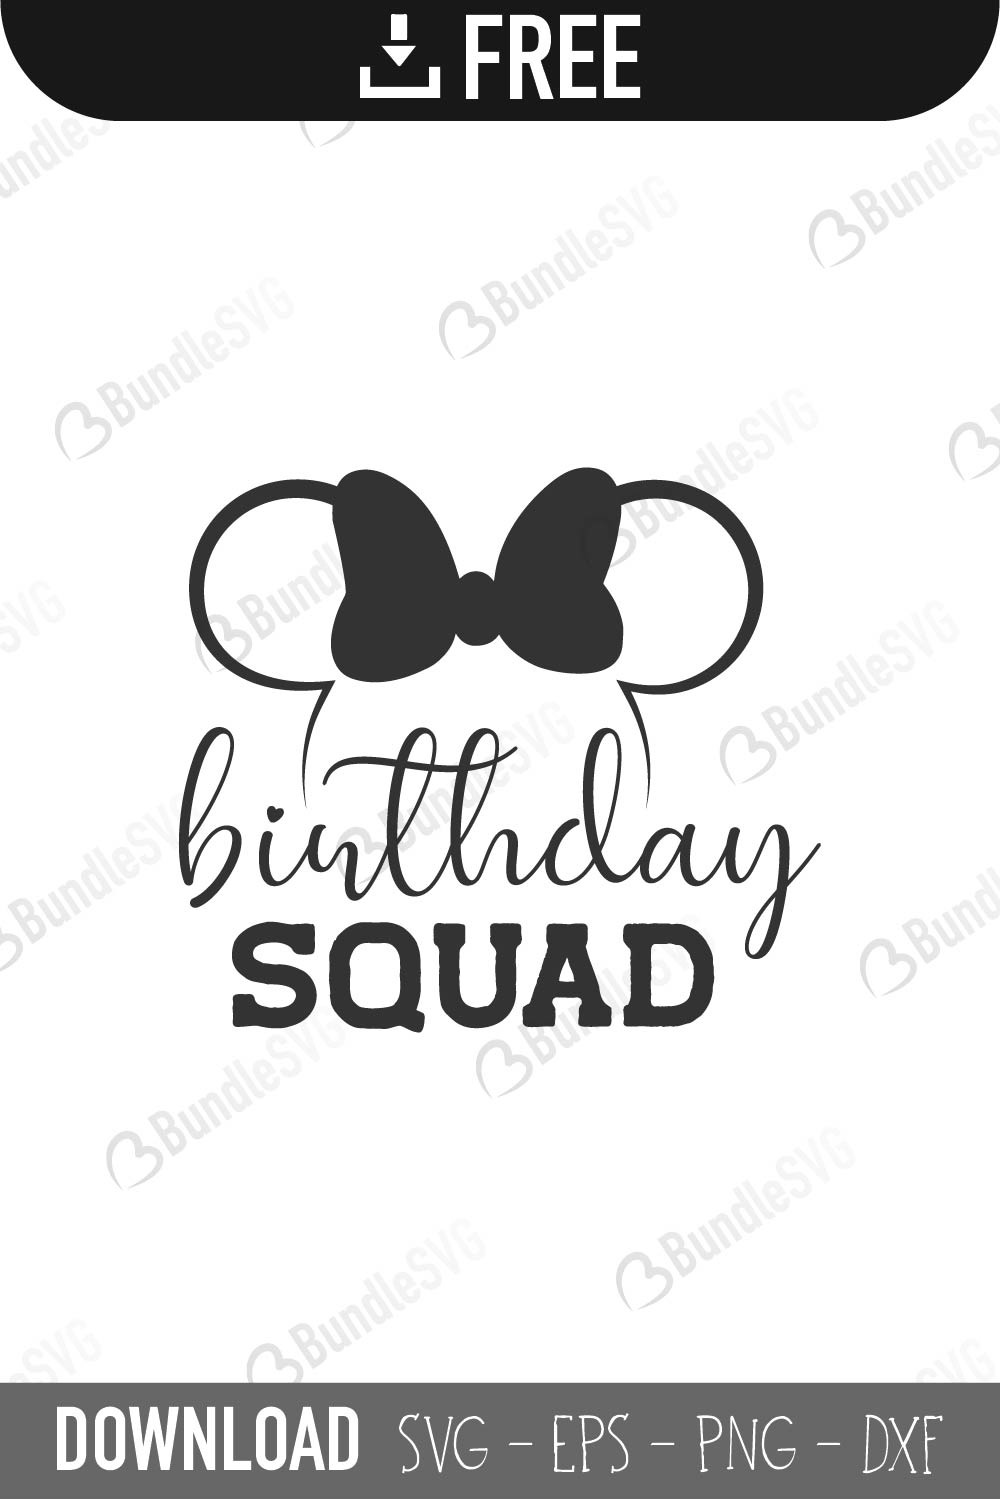 Download Birthday Squad SVG Cut Files Free Download | BundleSVG